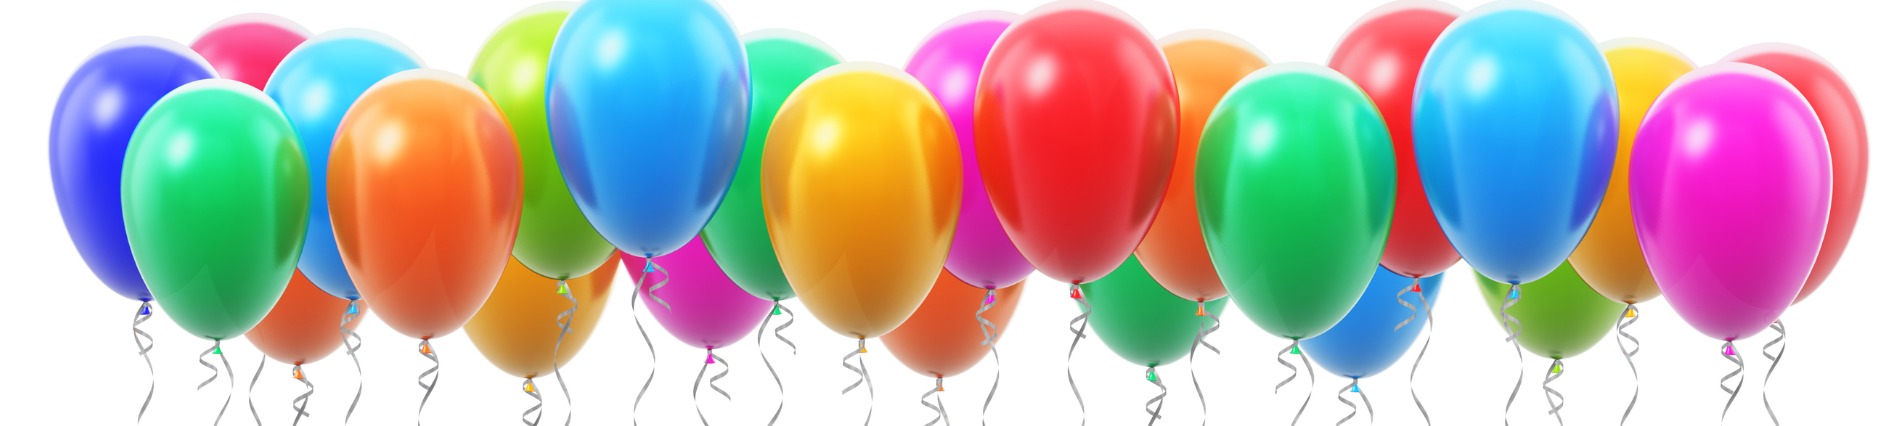 colourful birthday balloons